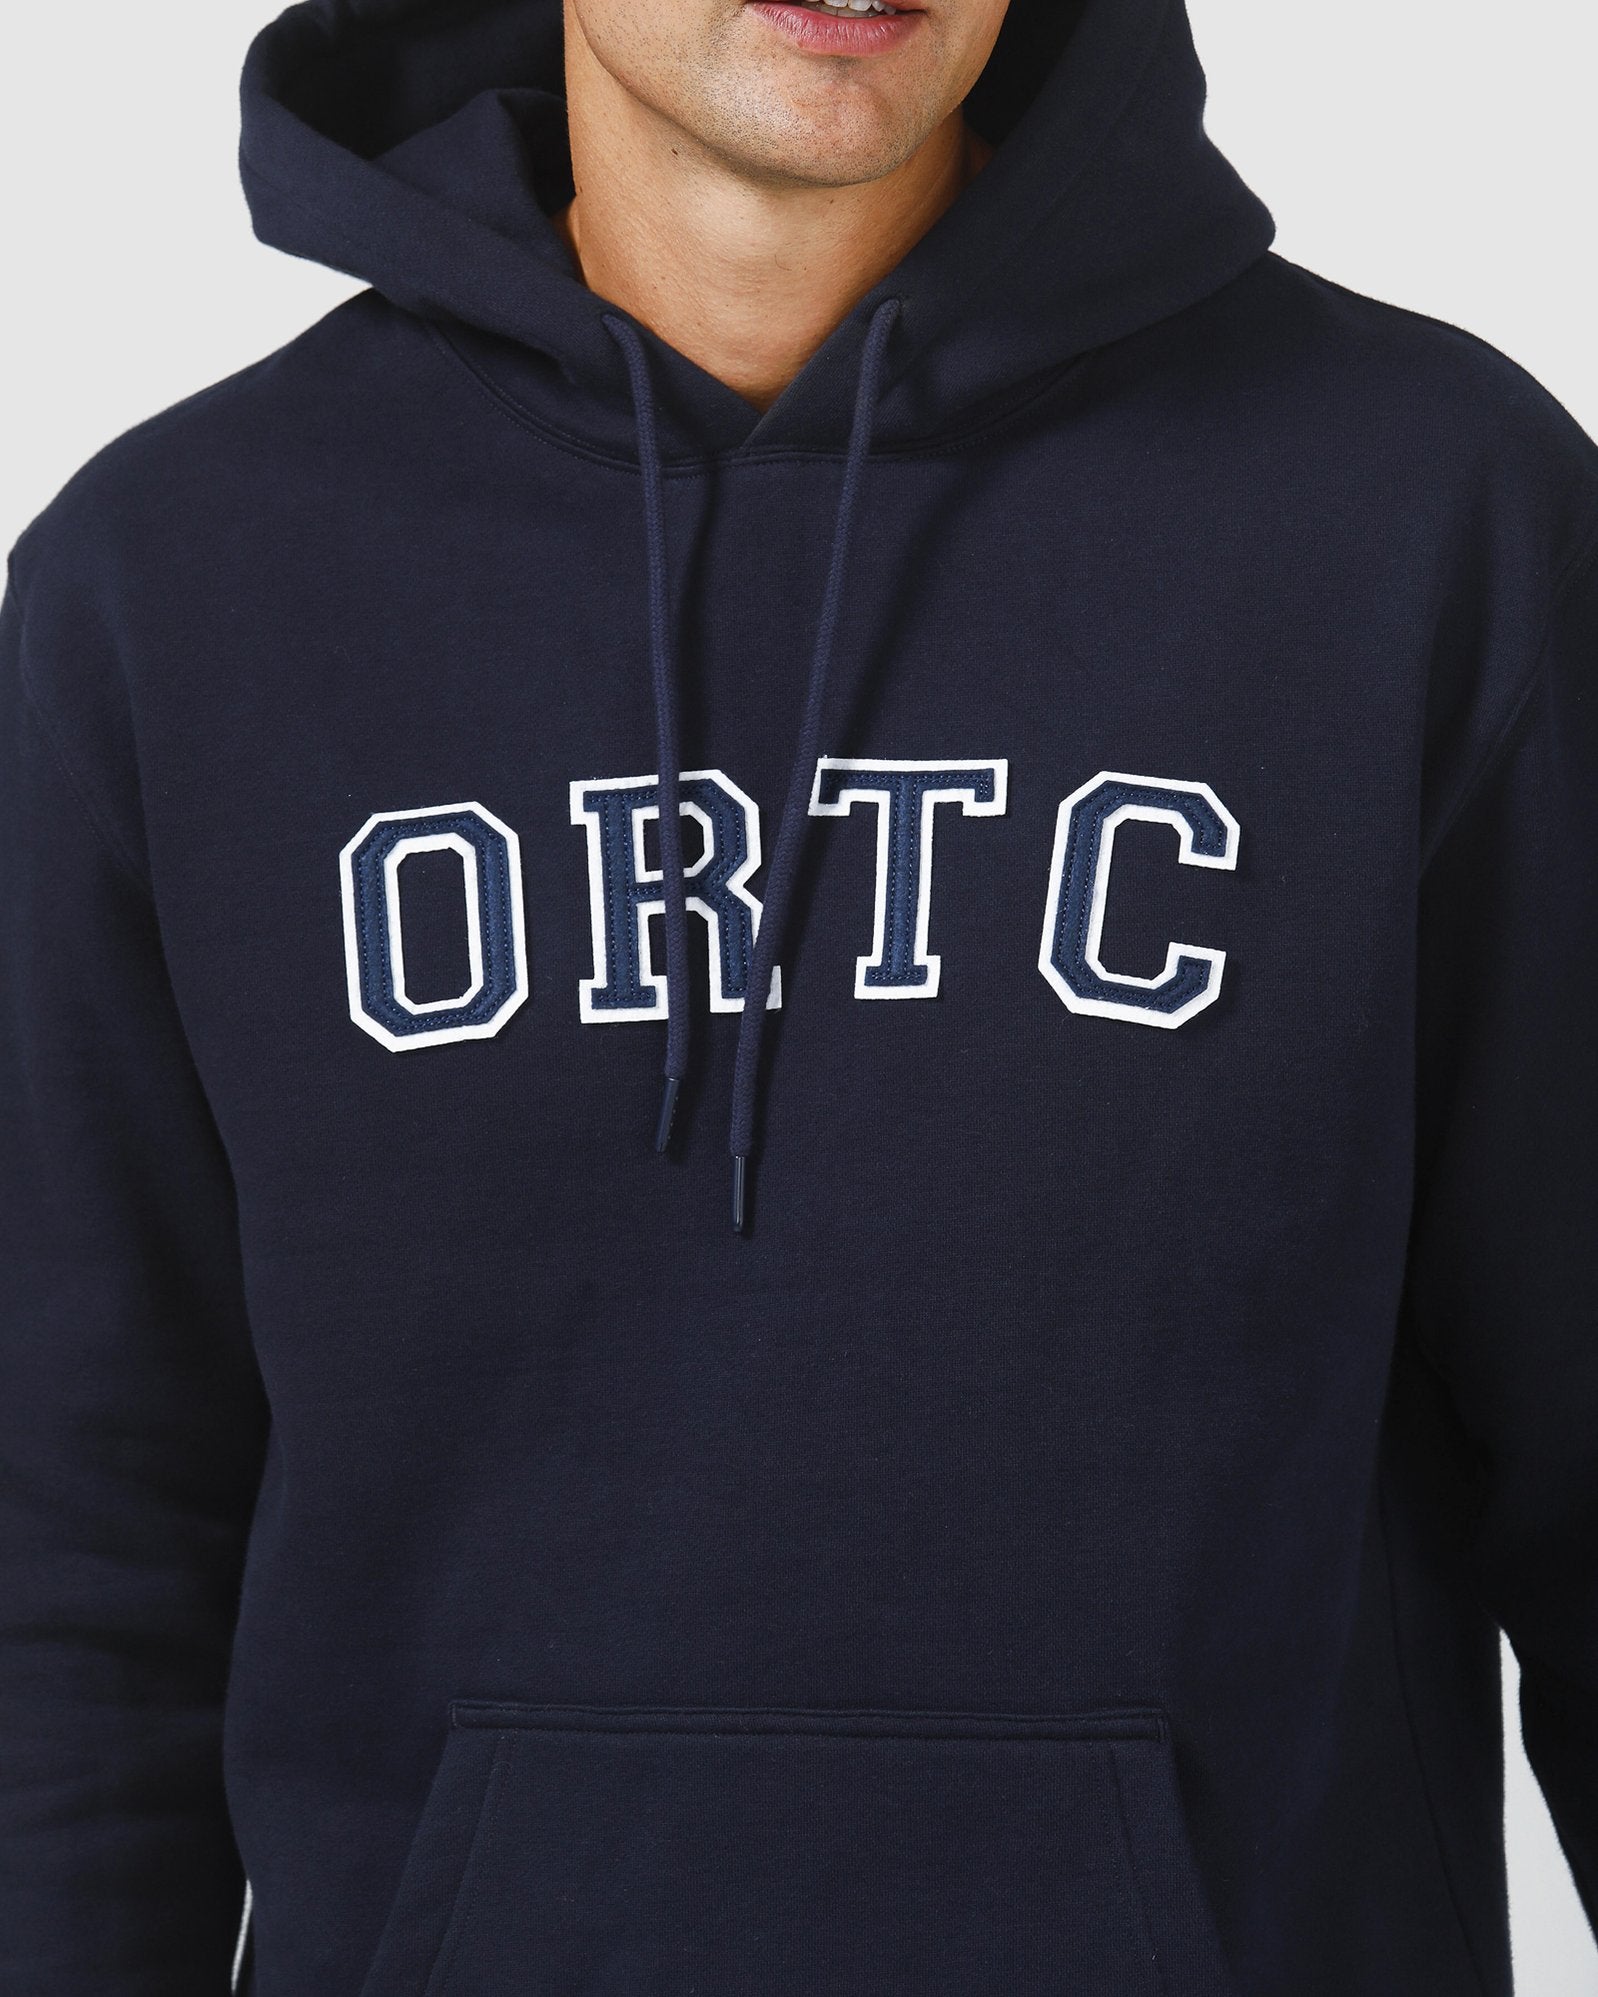 ORTC - Collage Fleece Hoodie